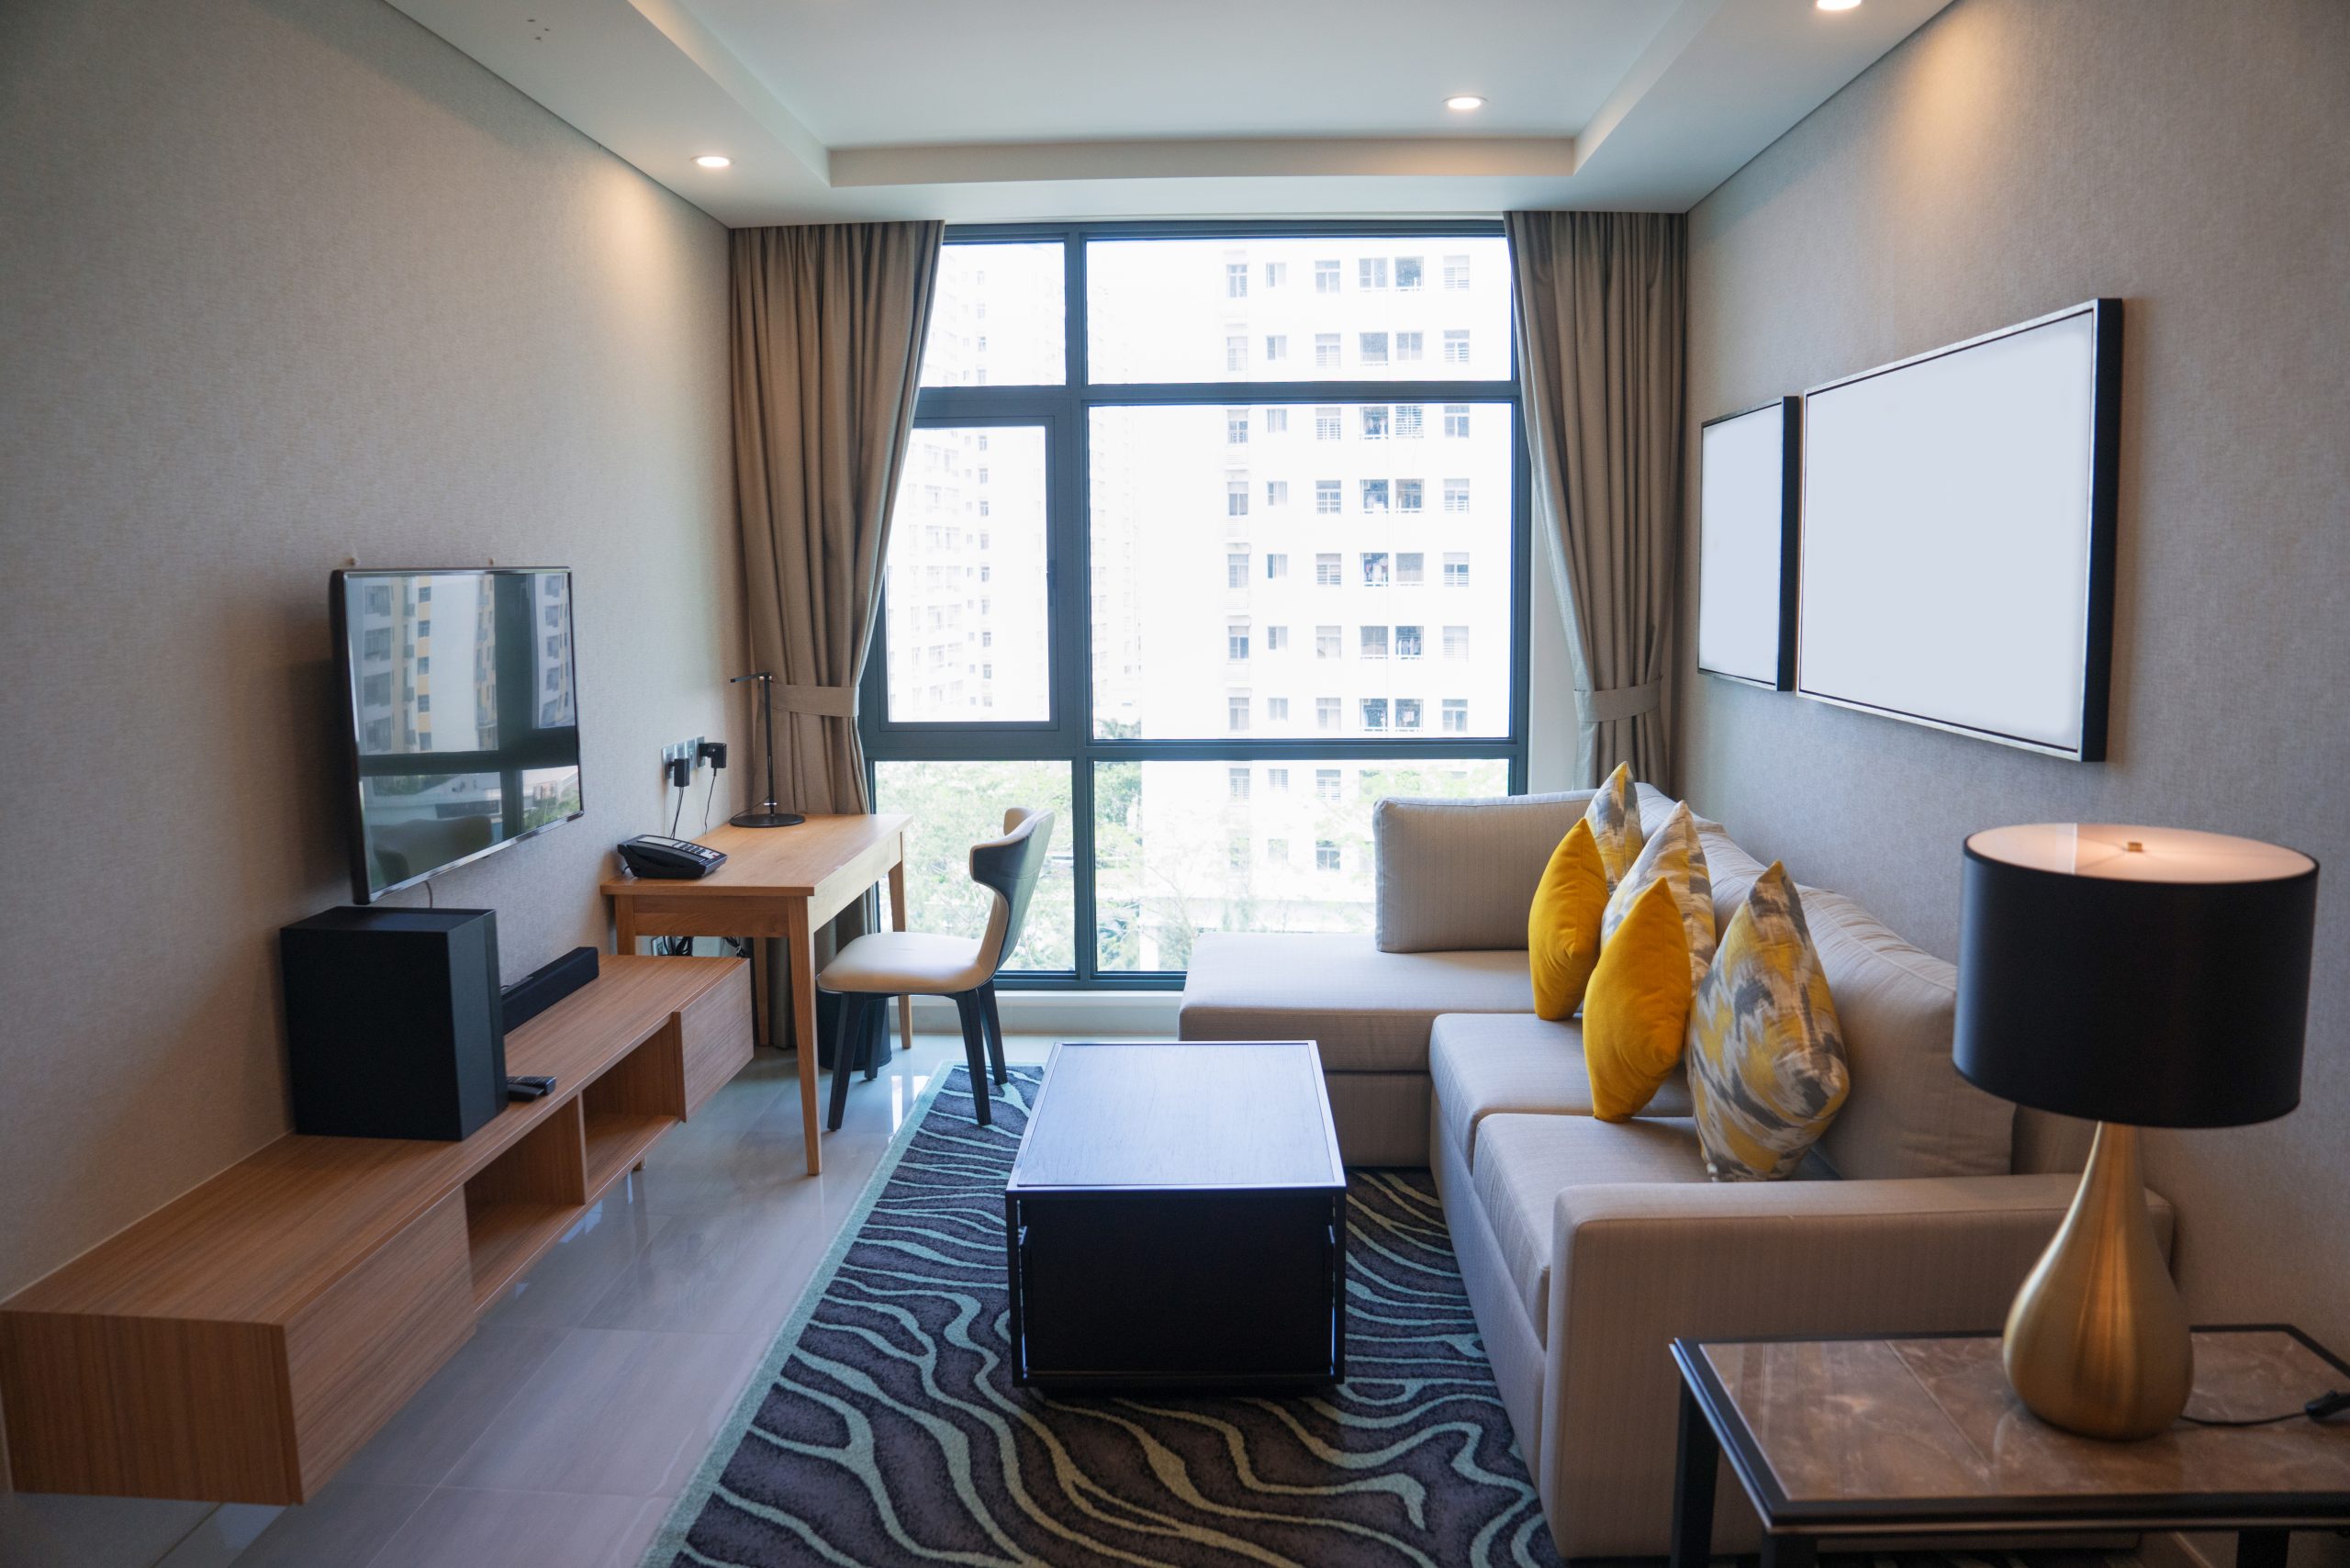 Cozy living room interior design with panoramic window